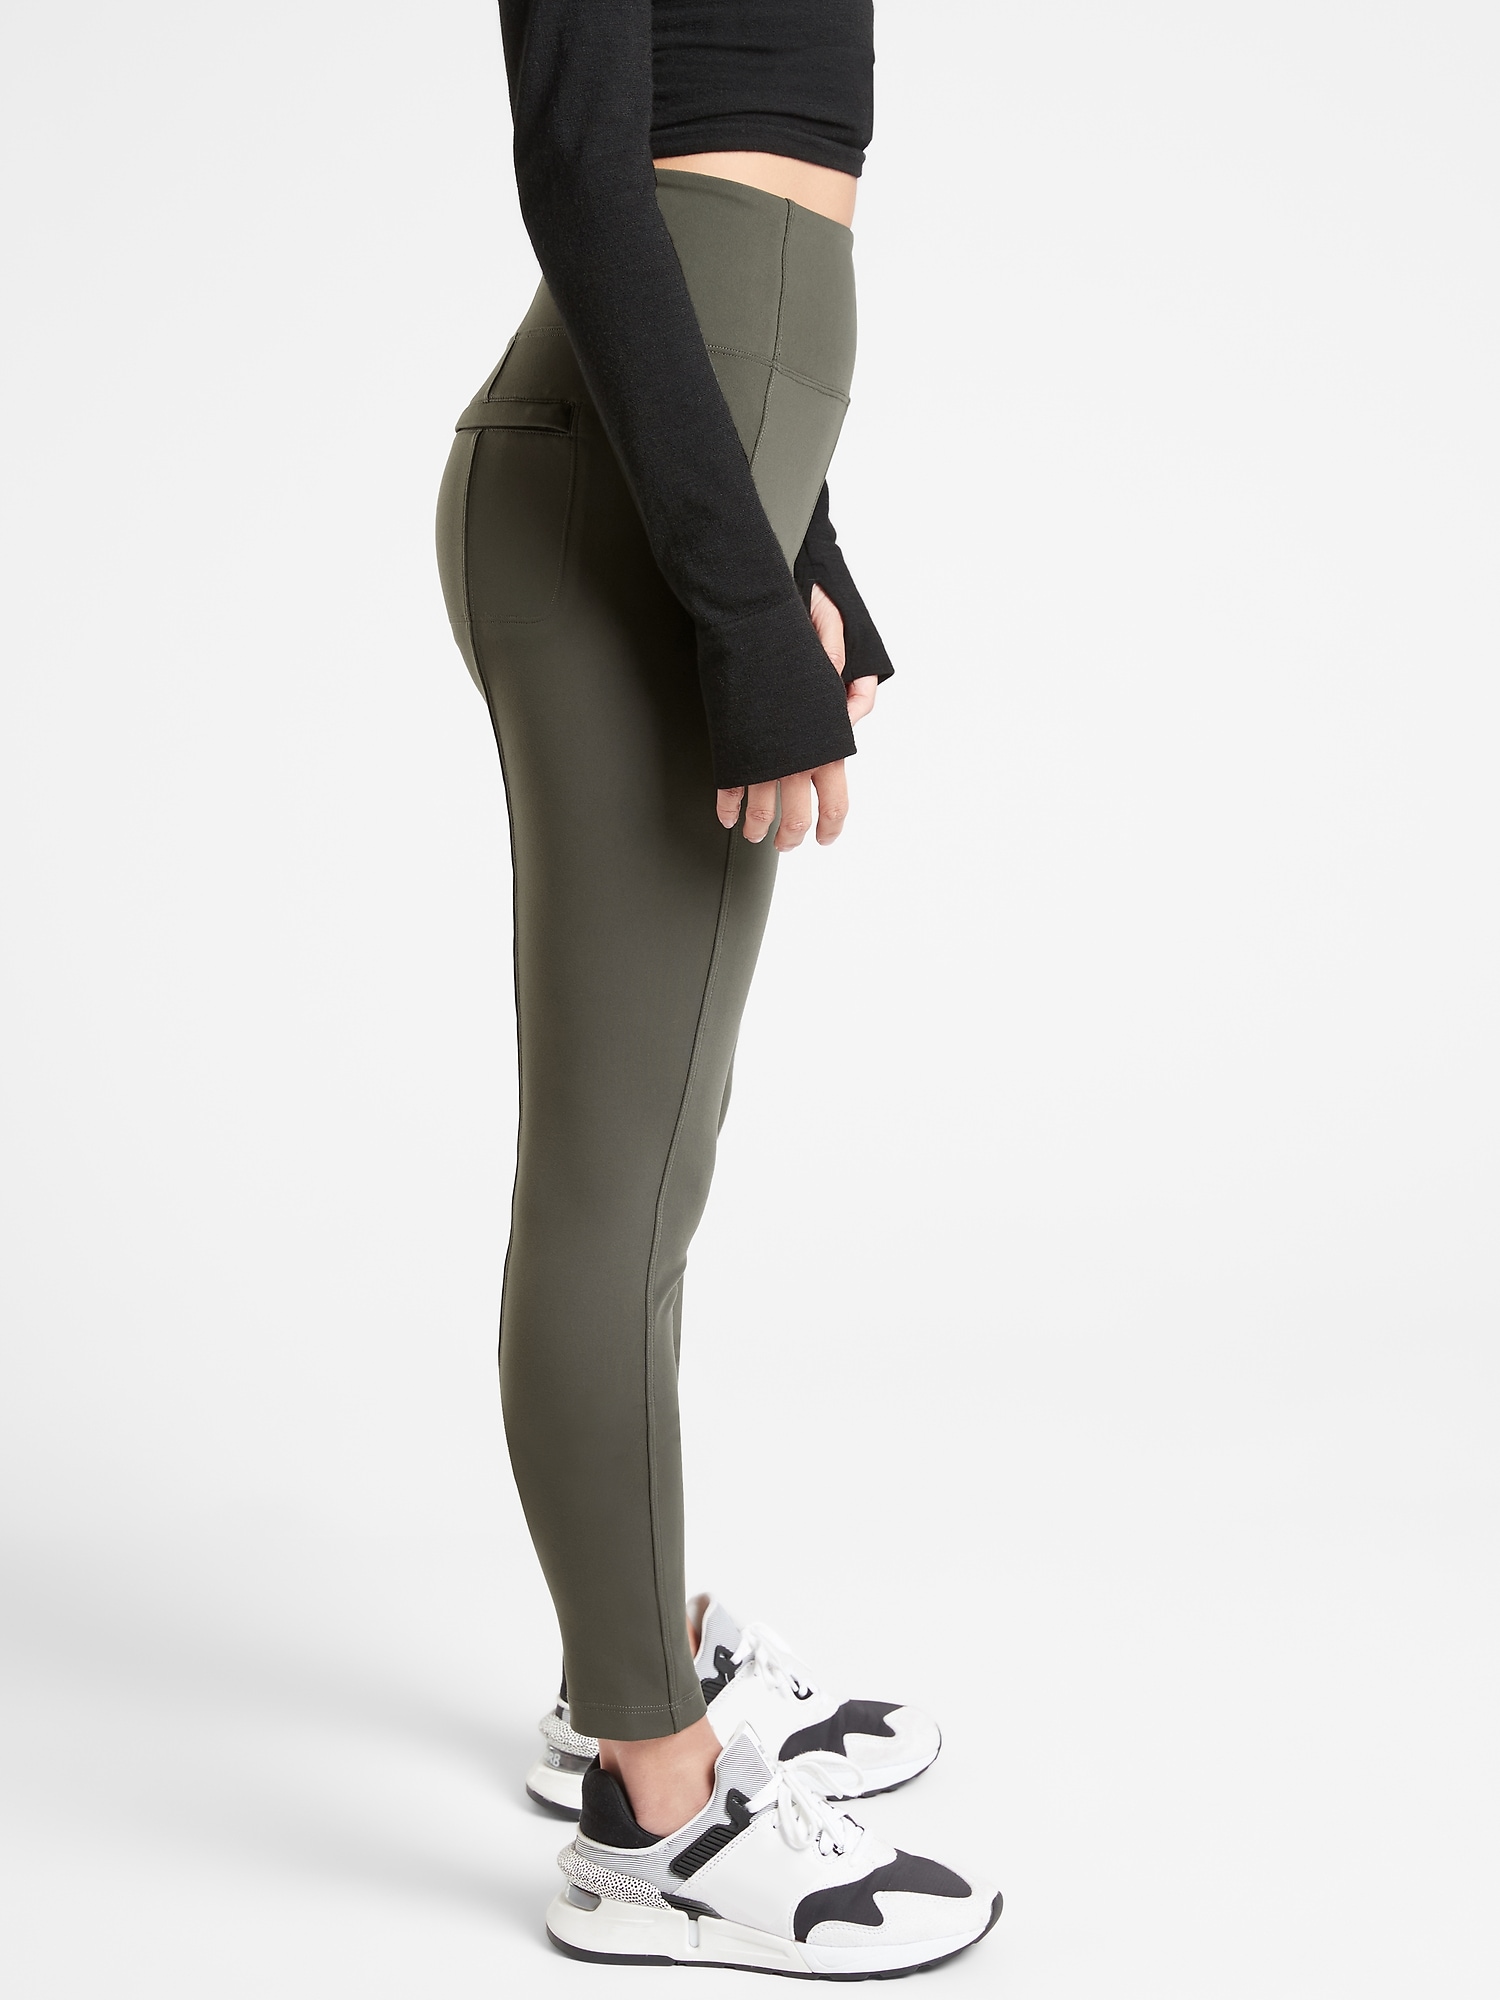 Athleta Delancey Moto Tight Women's Activewear Pants - Black Sz S Small  500050748964